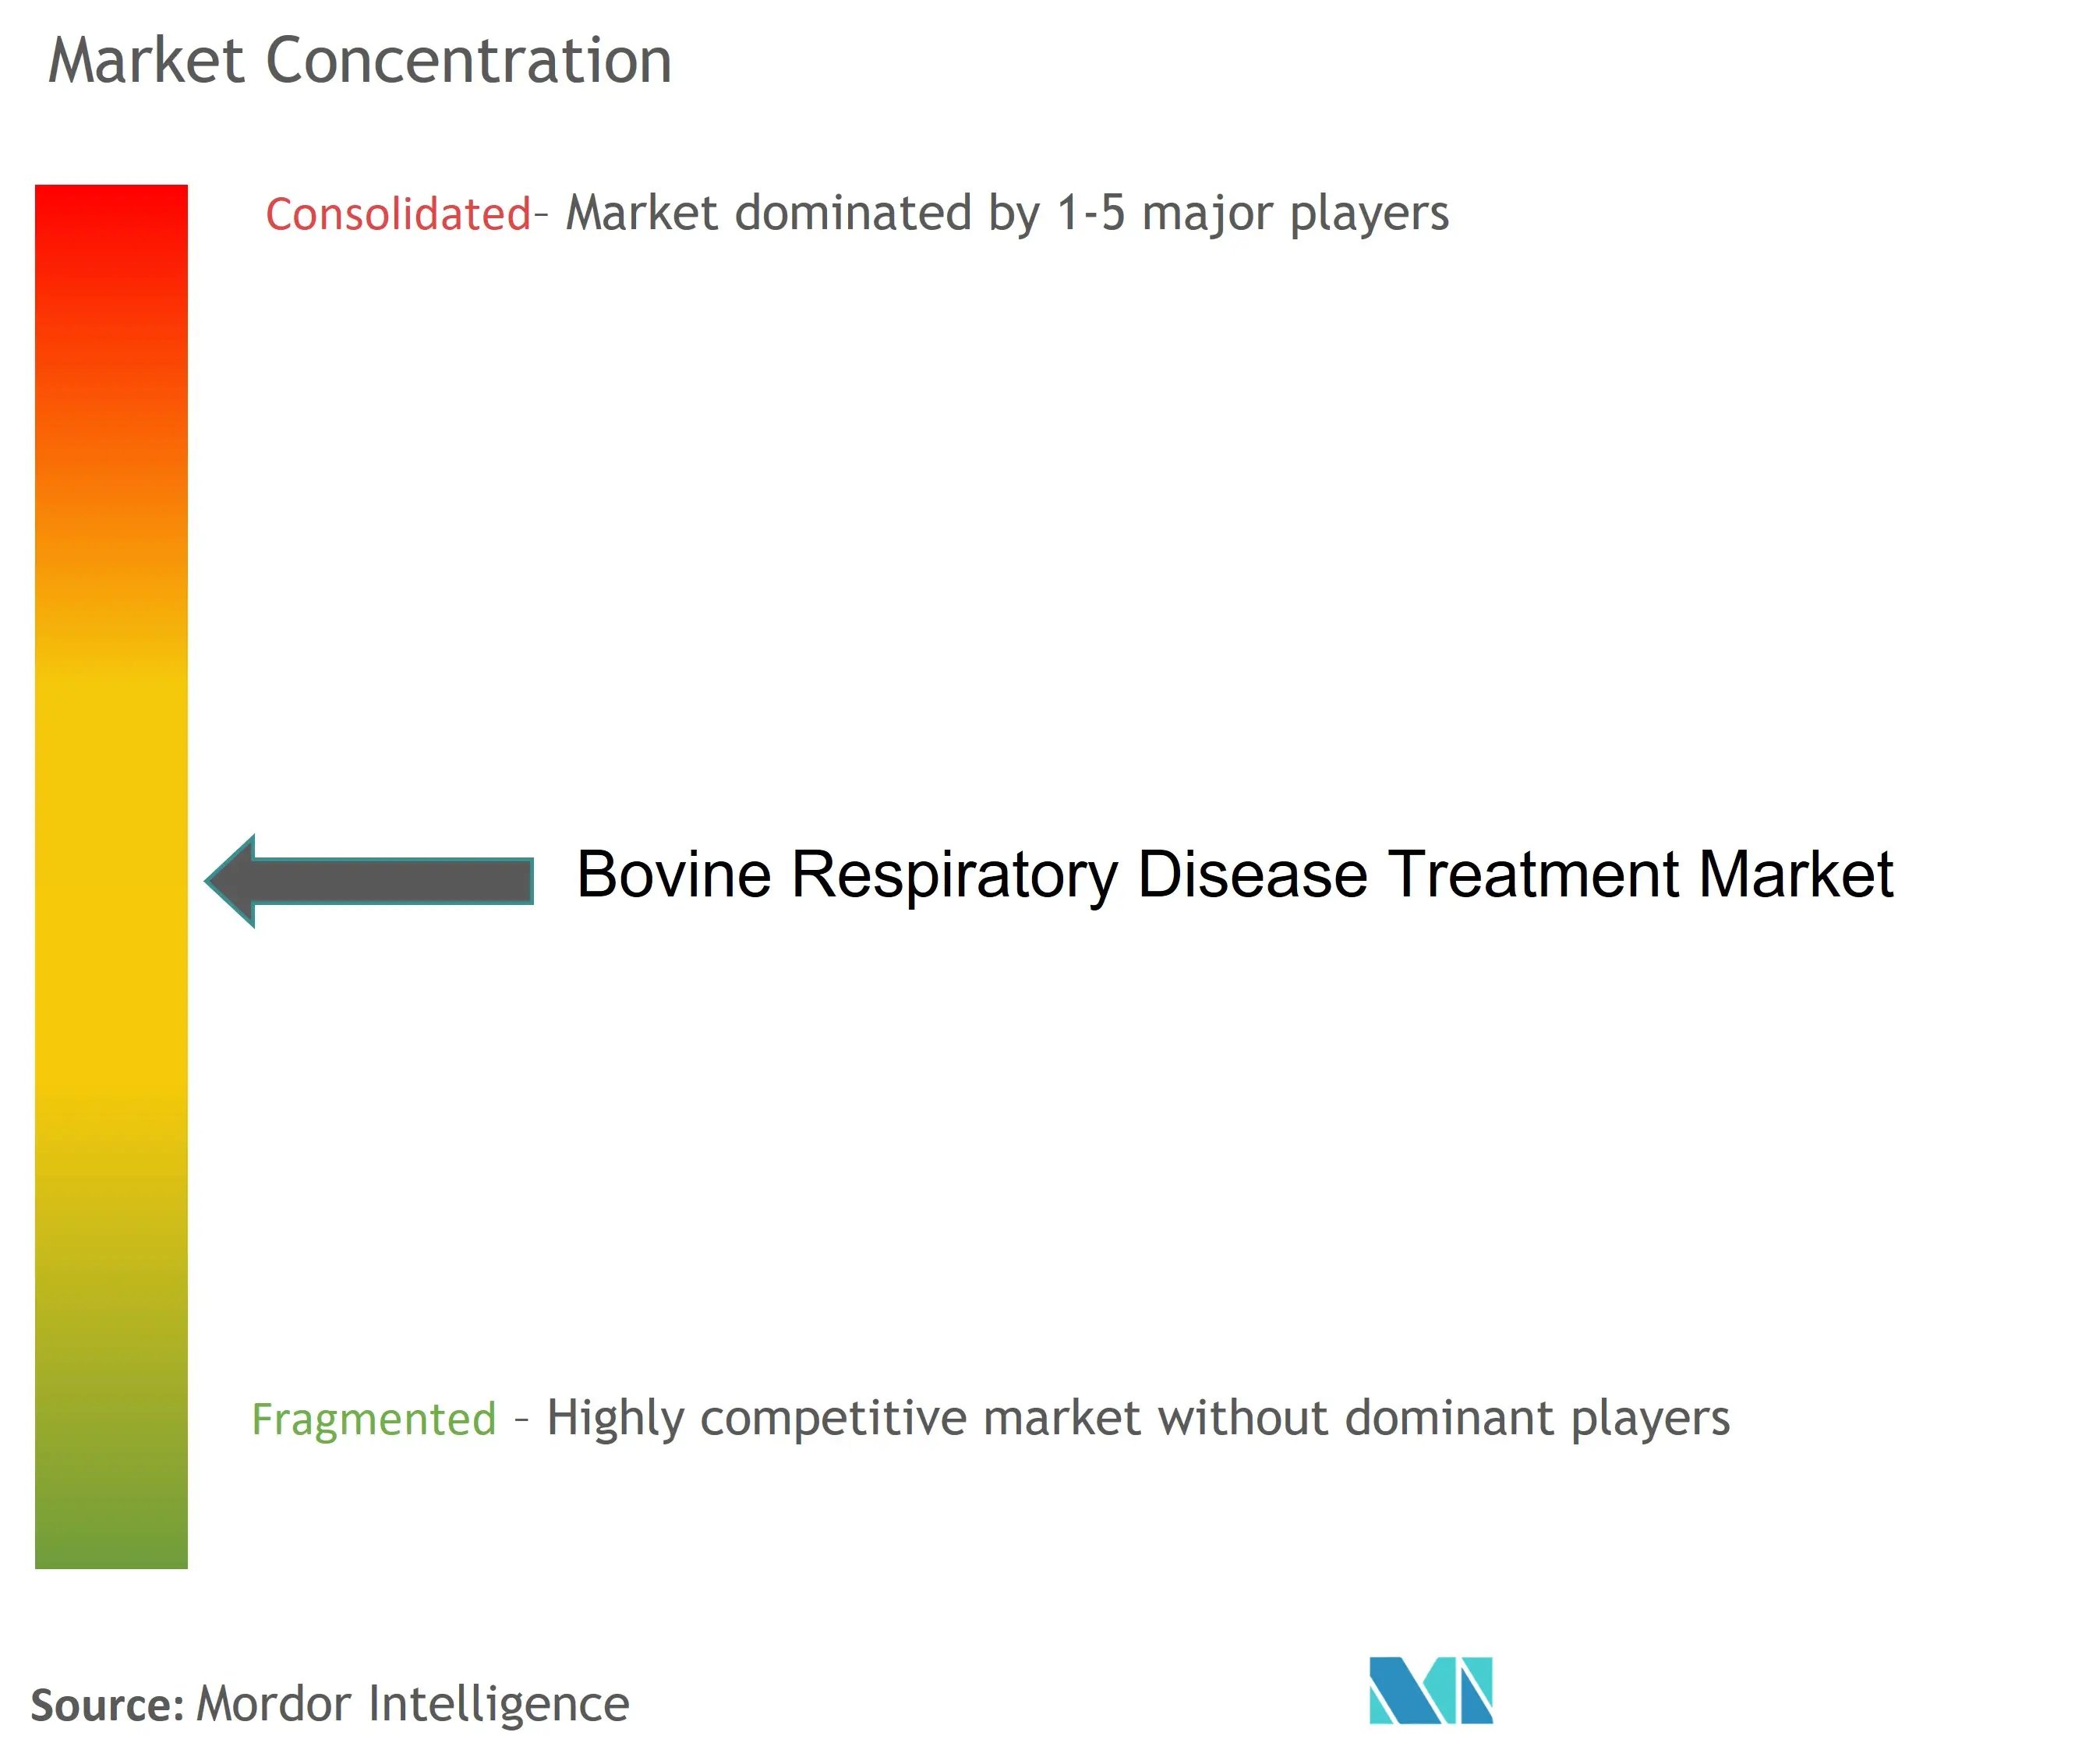 Bovine Respiratory Disease Treatment Market Concentration